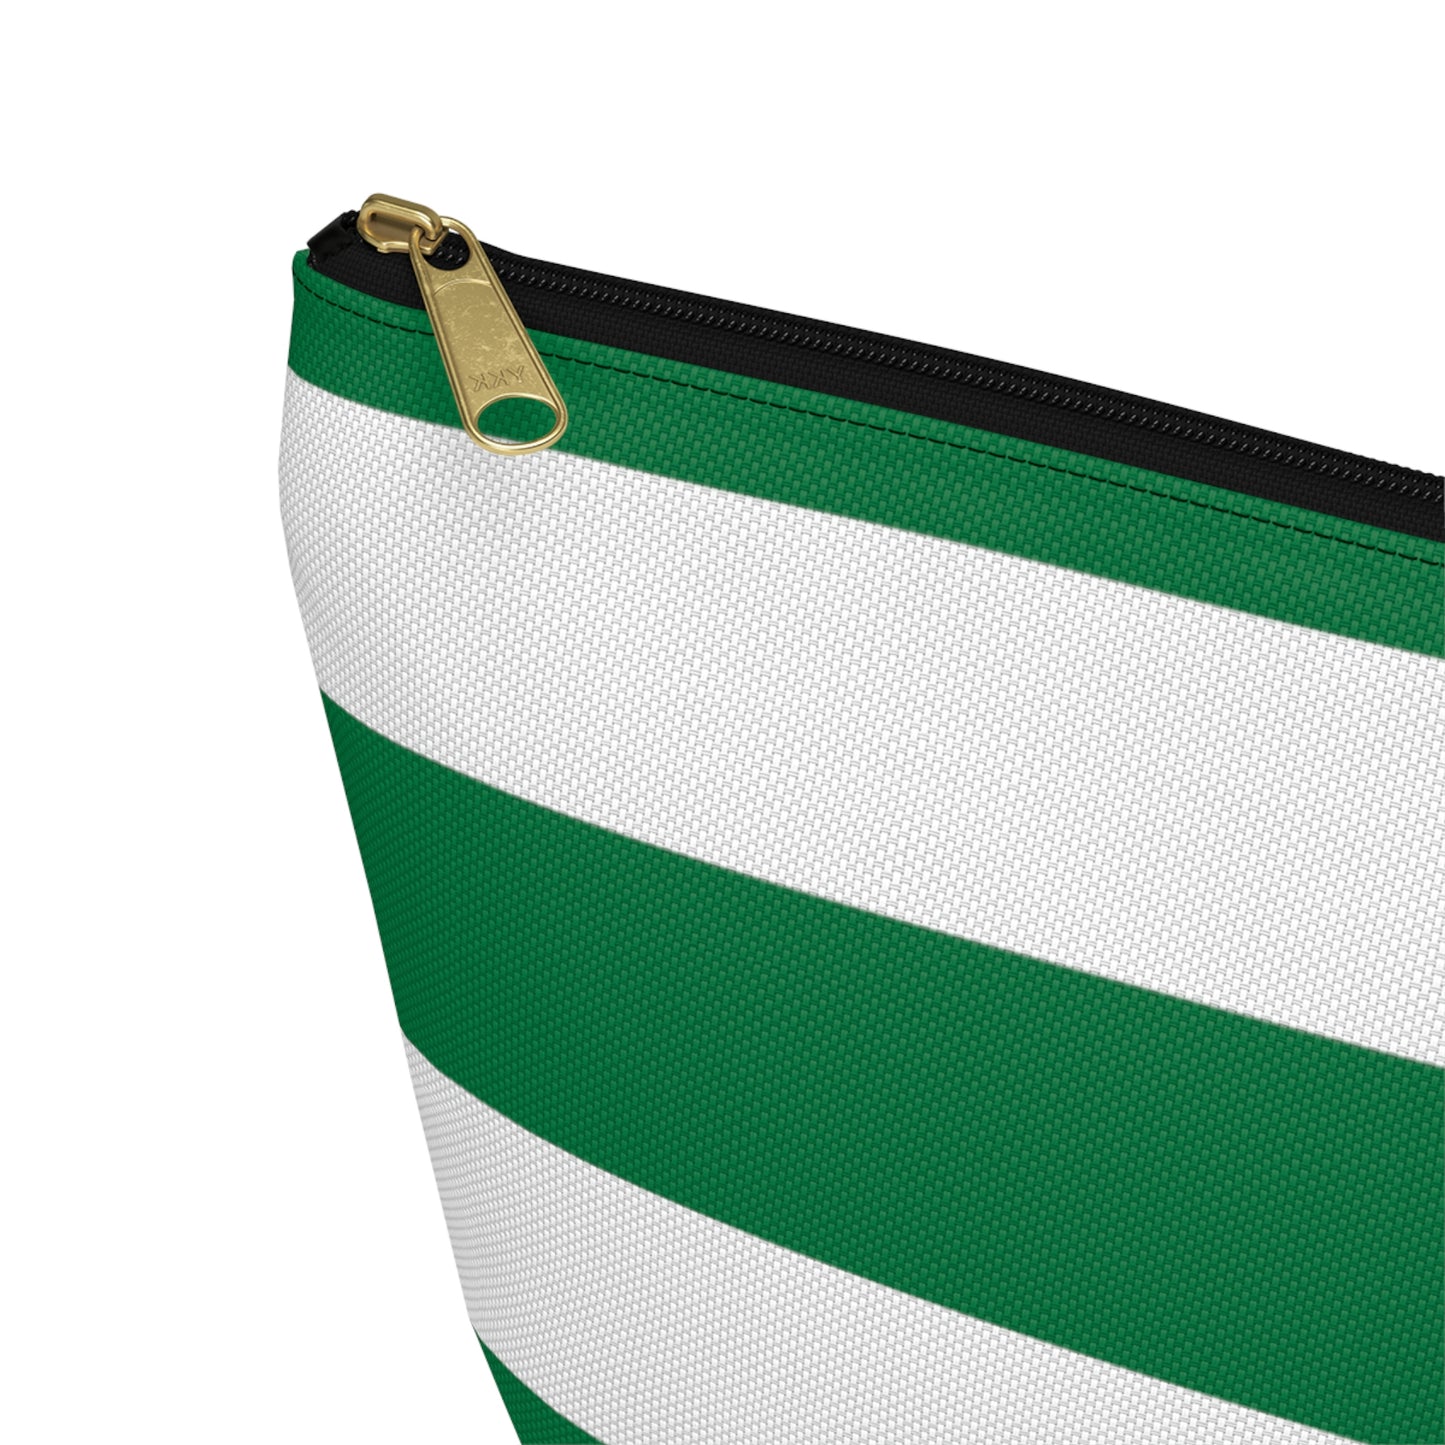 Big Bottom Zipper Pouch - Kelly Green/White Stripes